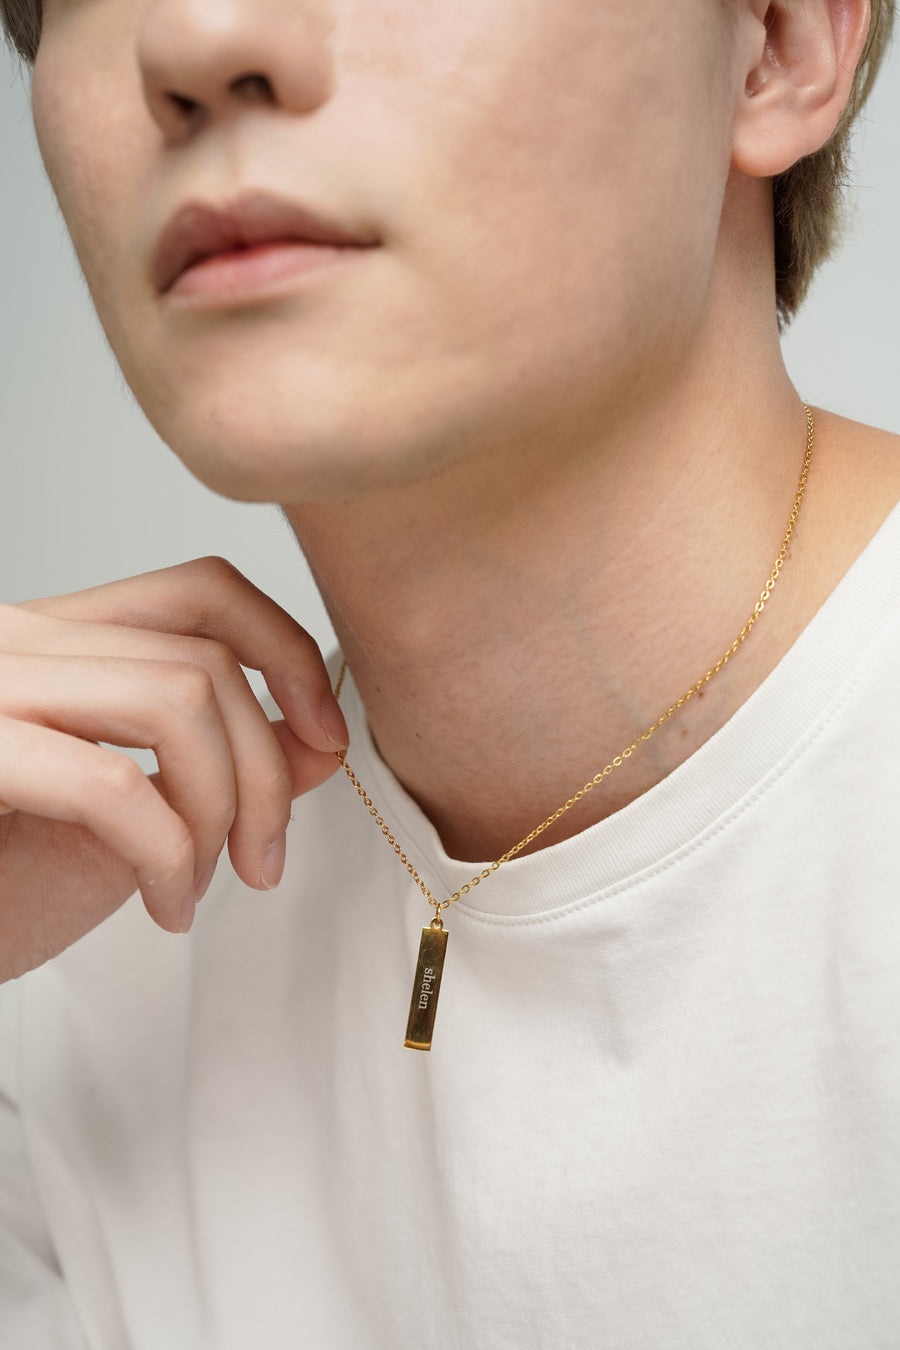 Skylar Vertical Engravable Bar Necklace (Silver)